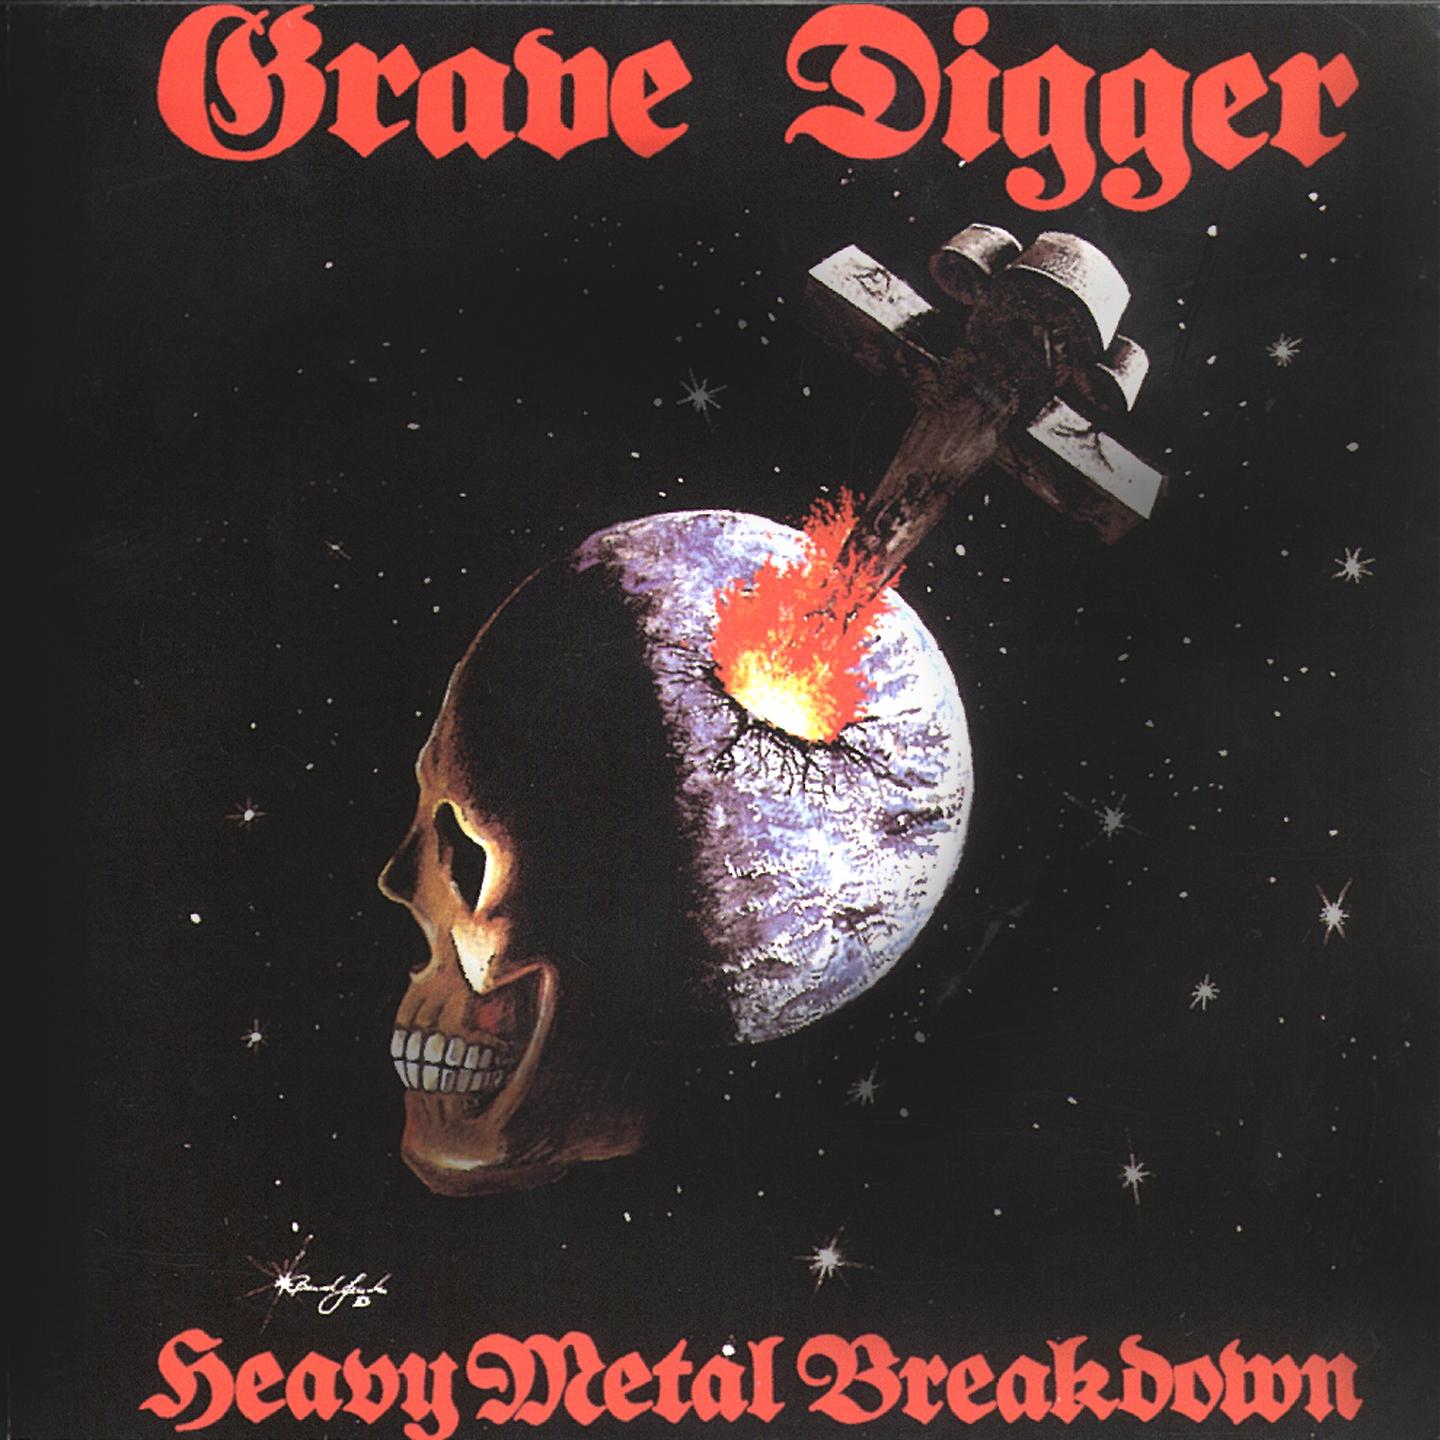 Heavy Metal Breakdown & Rare Tracks